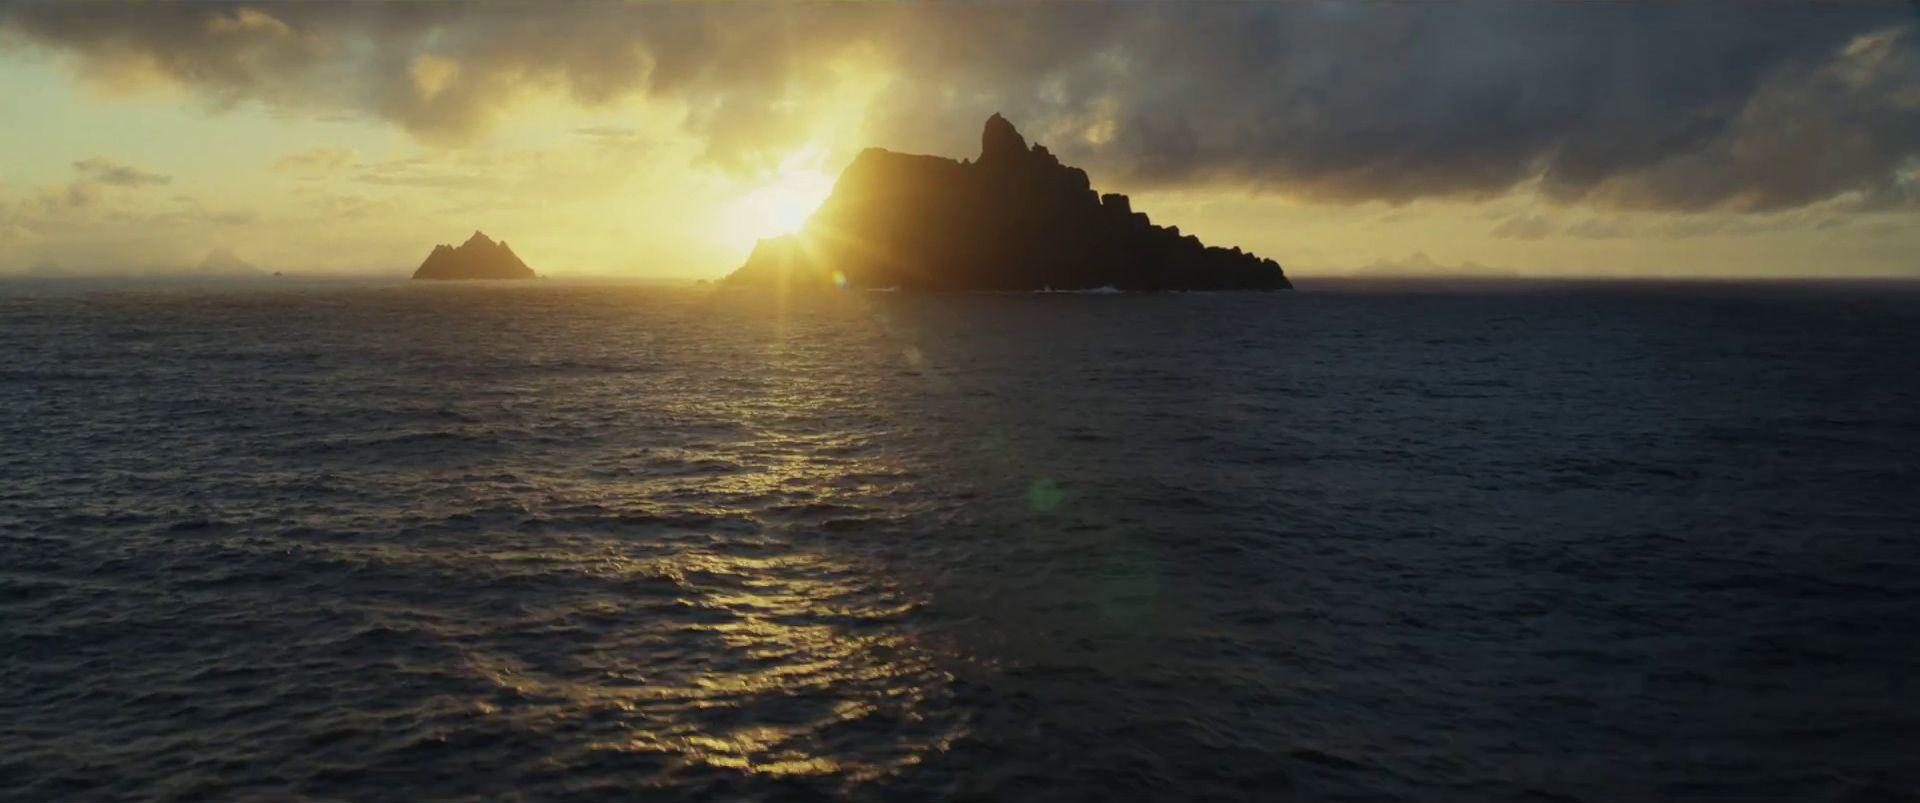 Star Wars: The Last Jedi trailer is absolutely beautiful